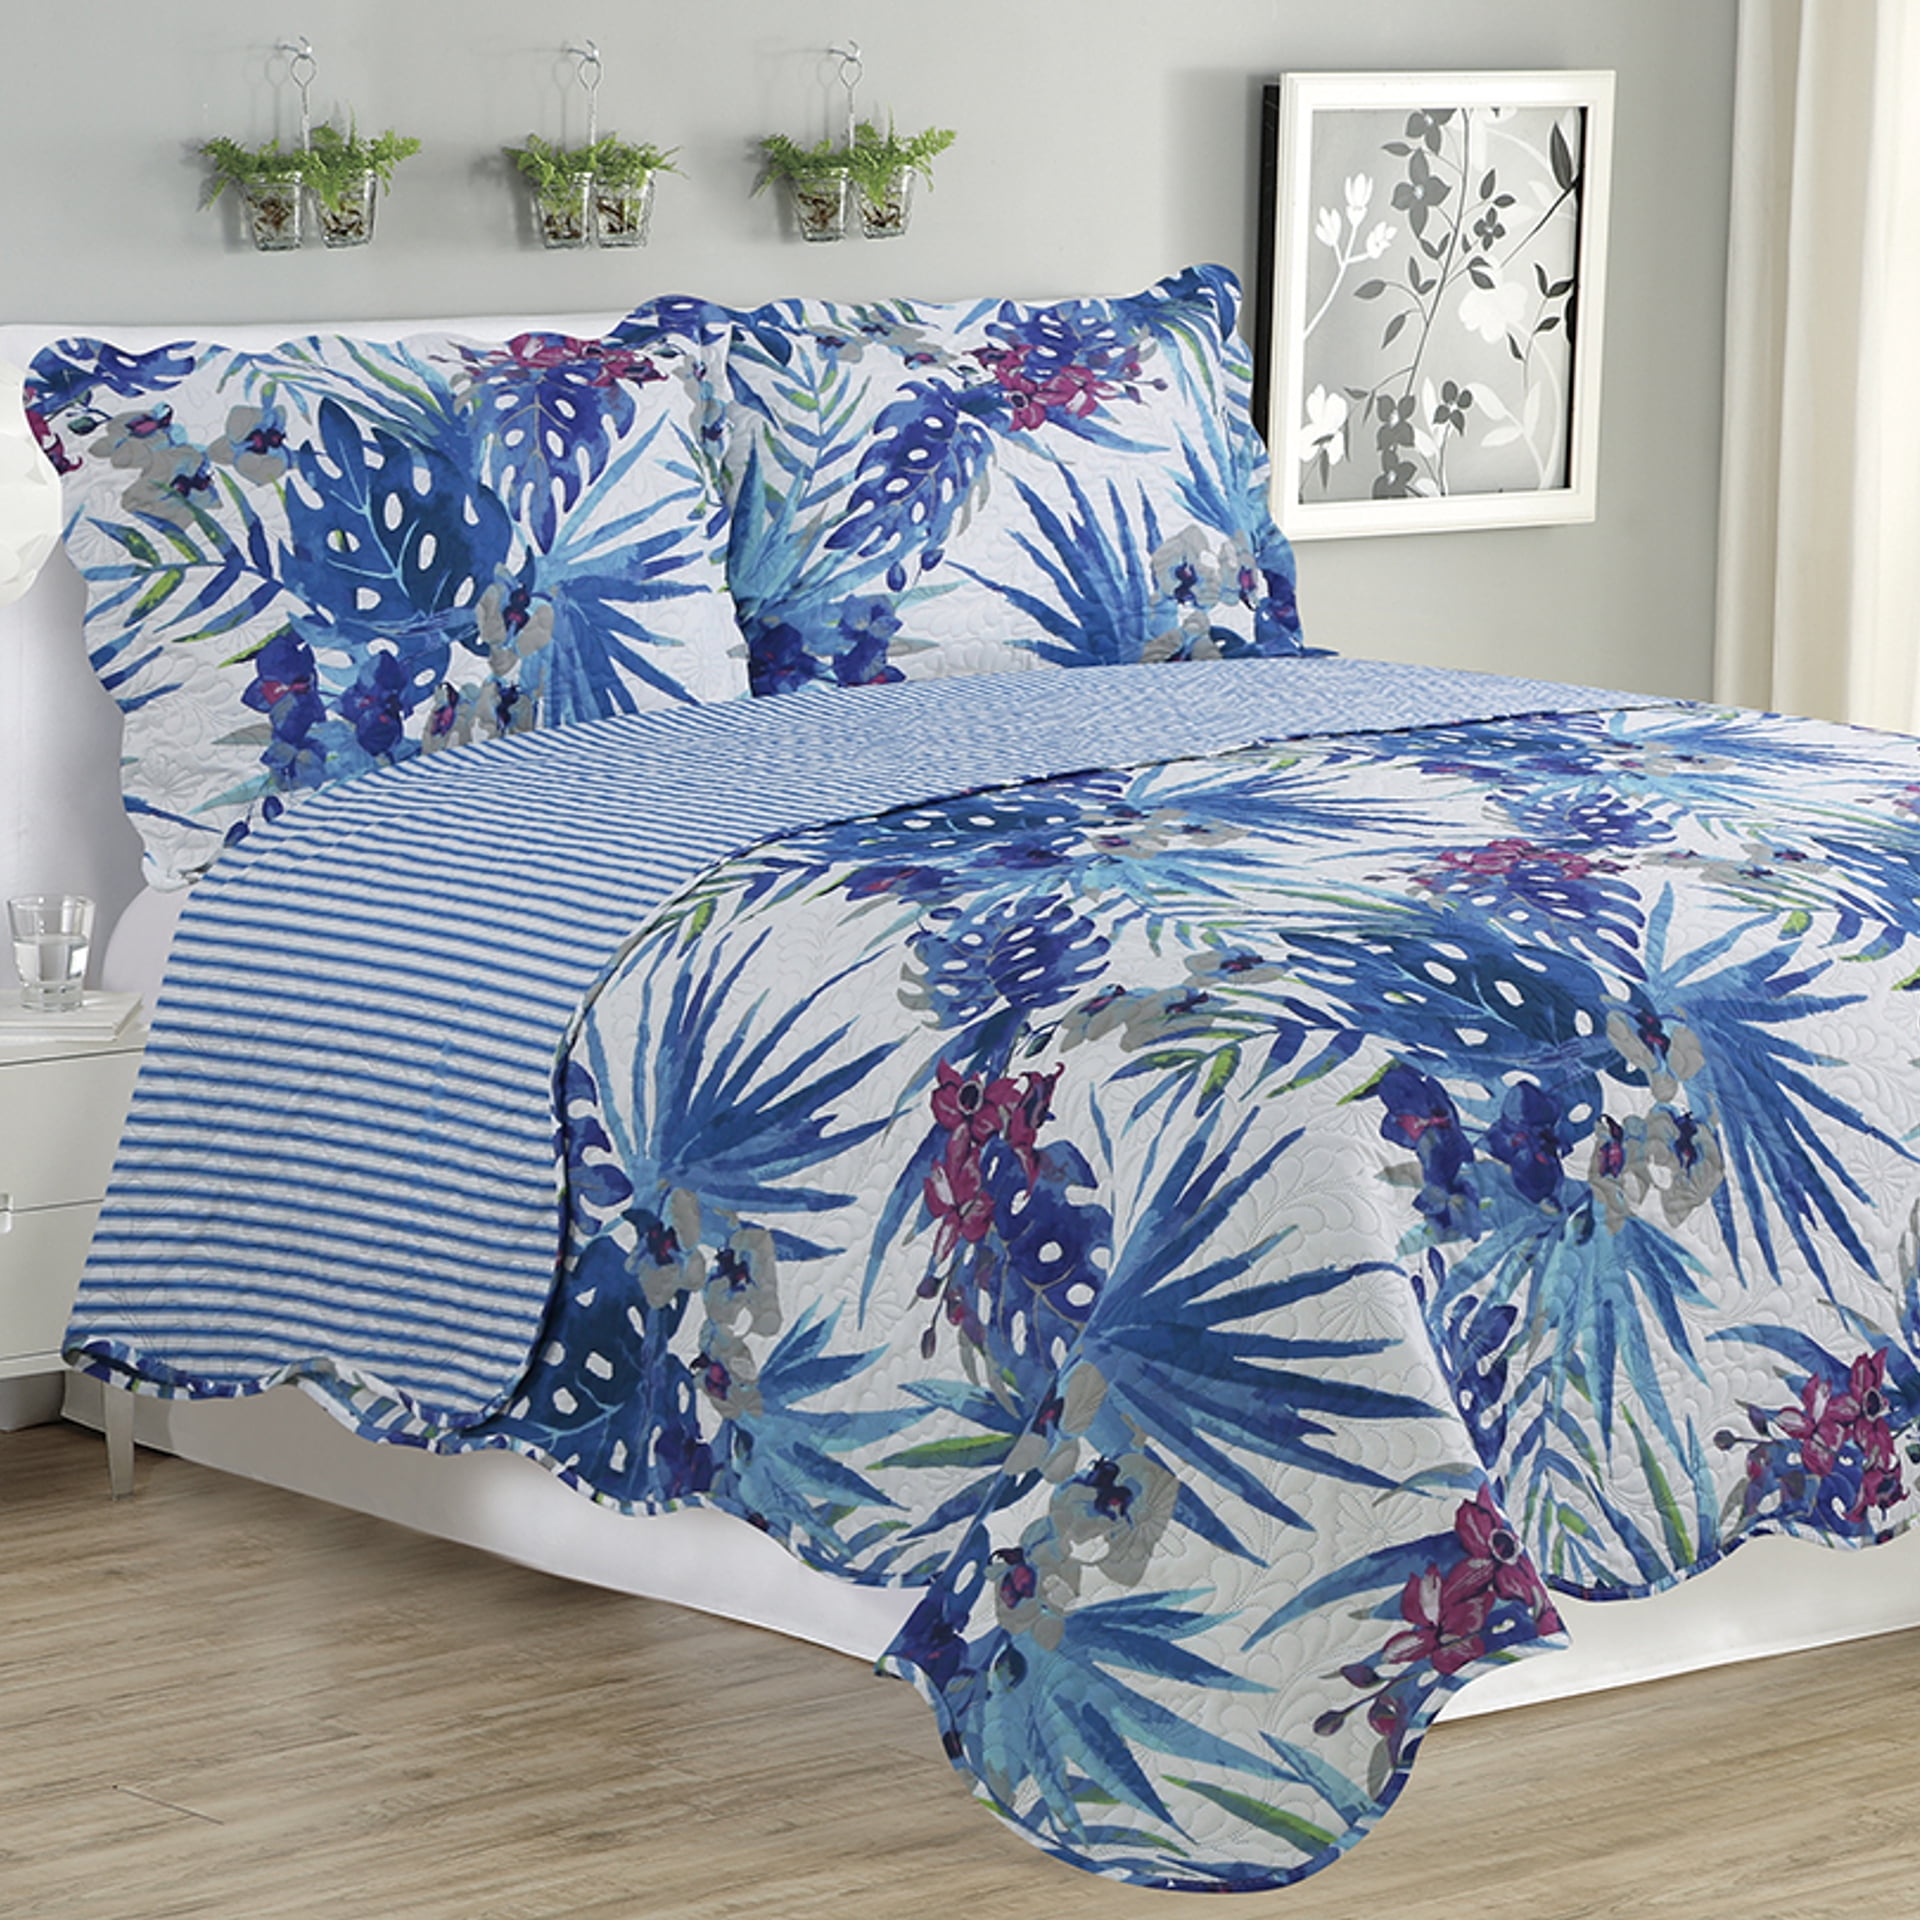 Floral Blue Patchwork Quilted Coverlet Queen King Size Bedspread Set Comforter 